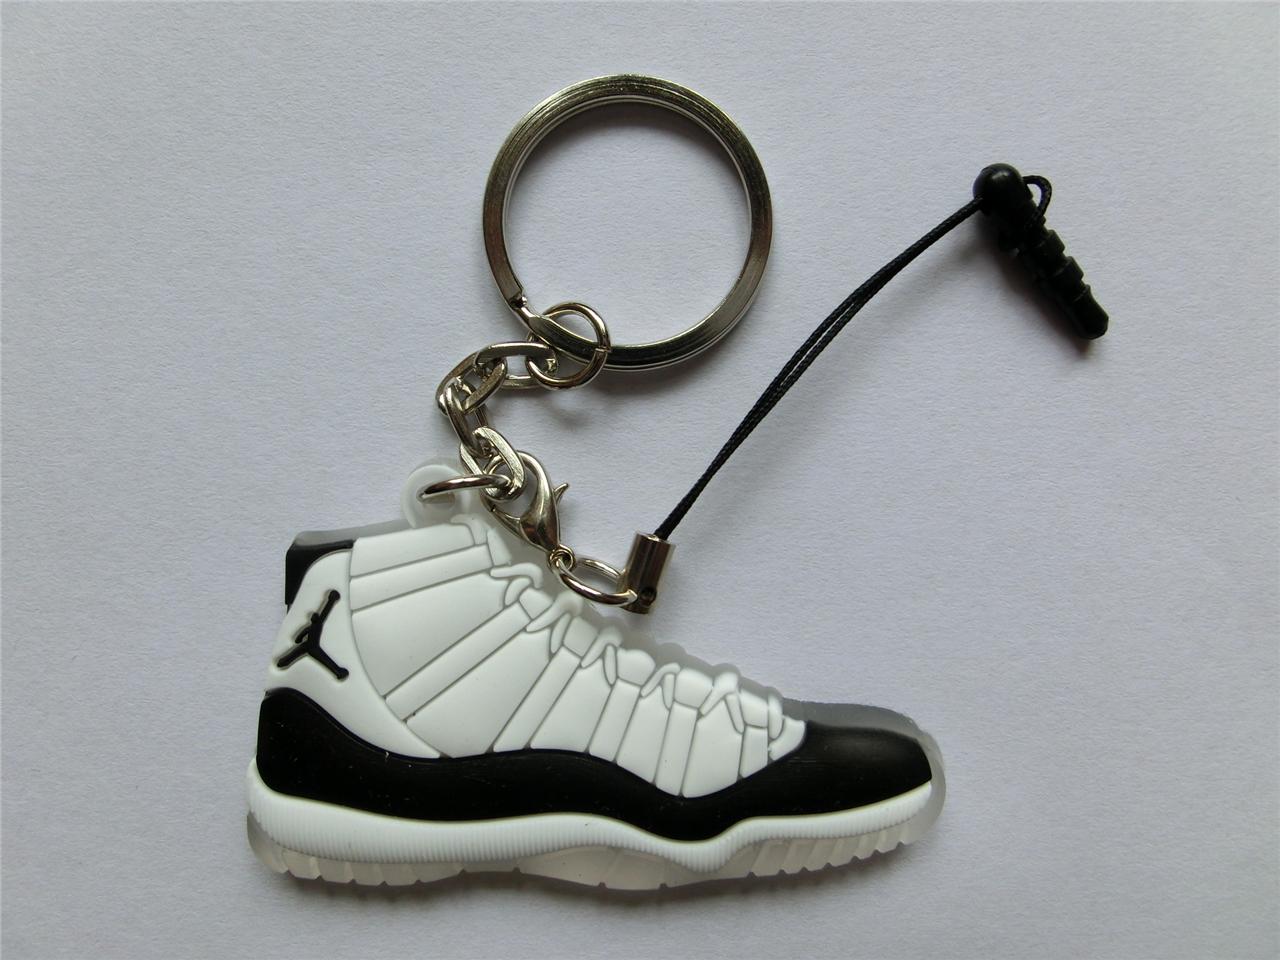 New Air Jordan XI AJ11 Retro Sneaker KeyChain eBay